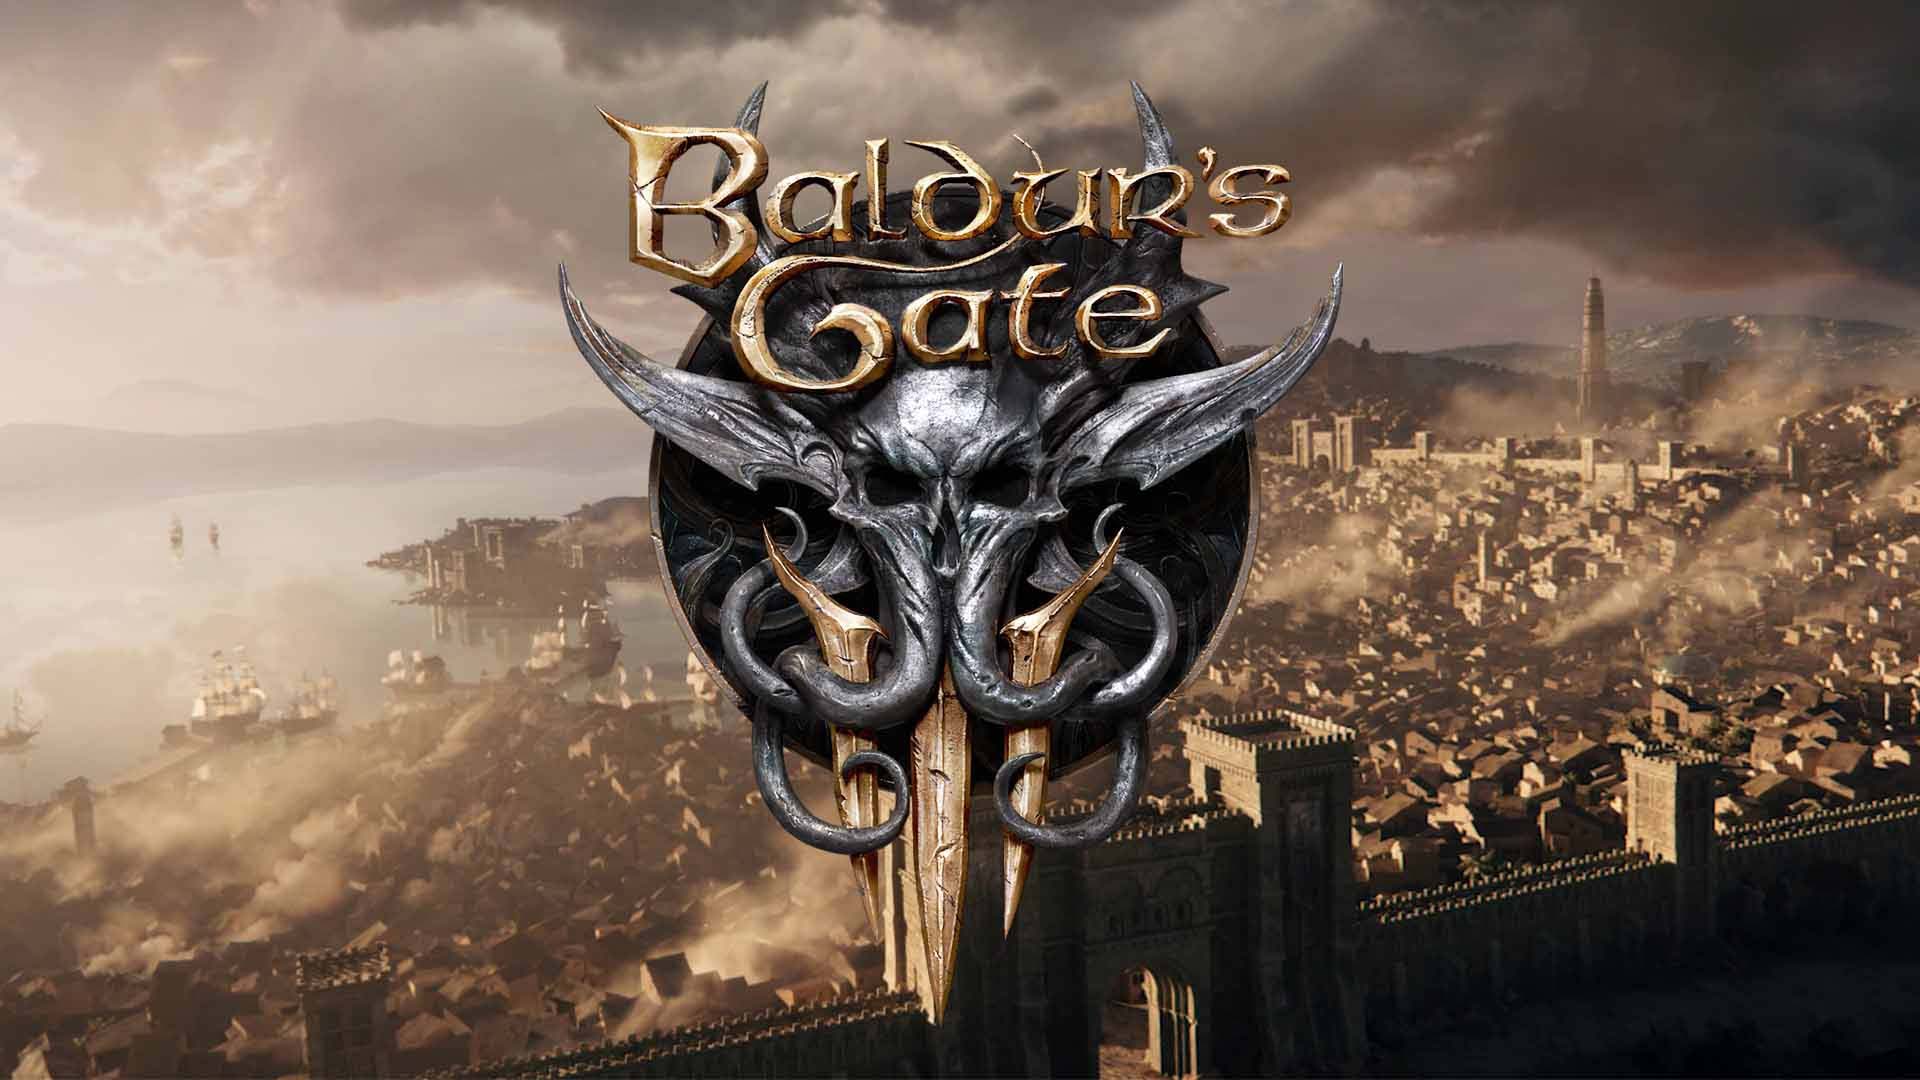 baldur's gate III early access